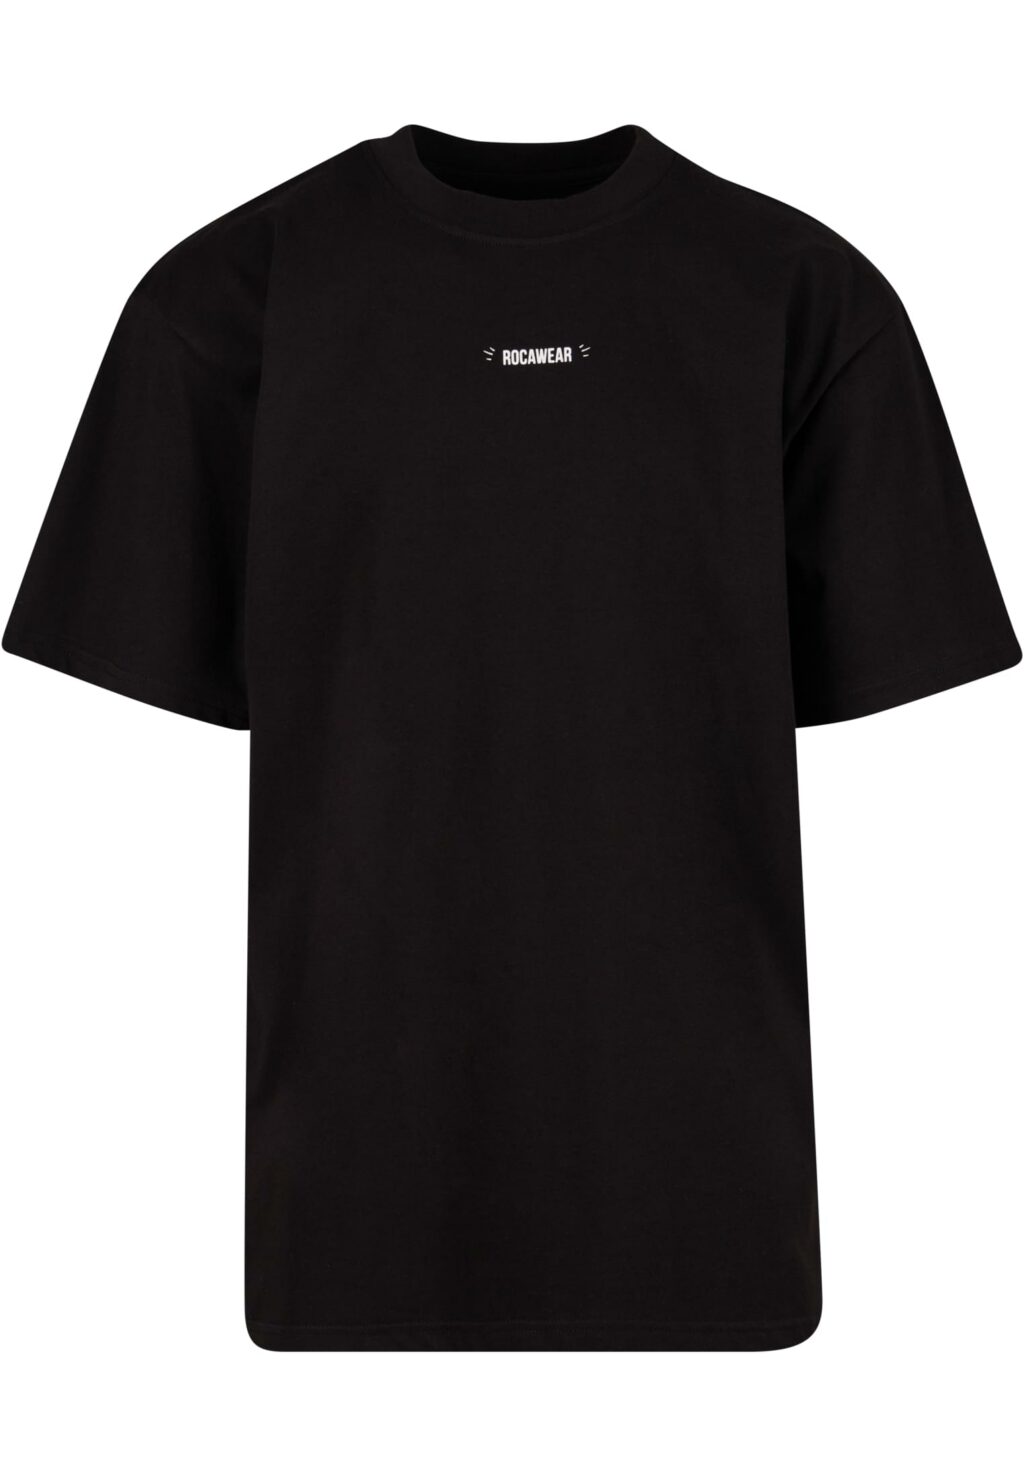 Rocawear Tshirt Hood black RWTS098